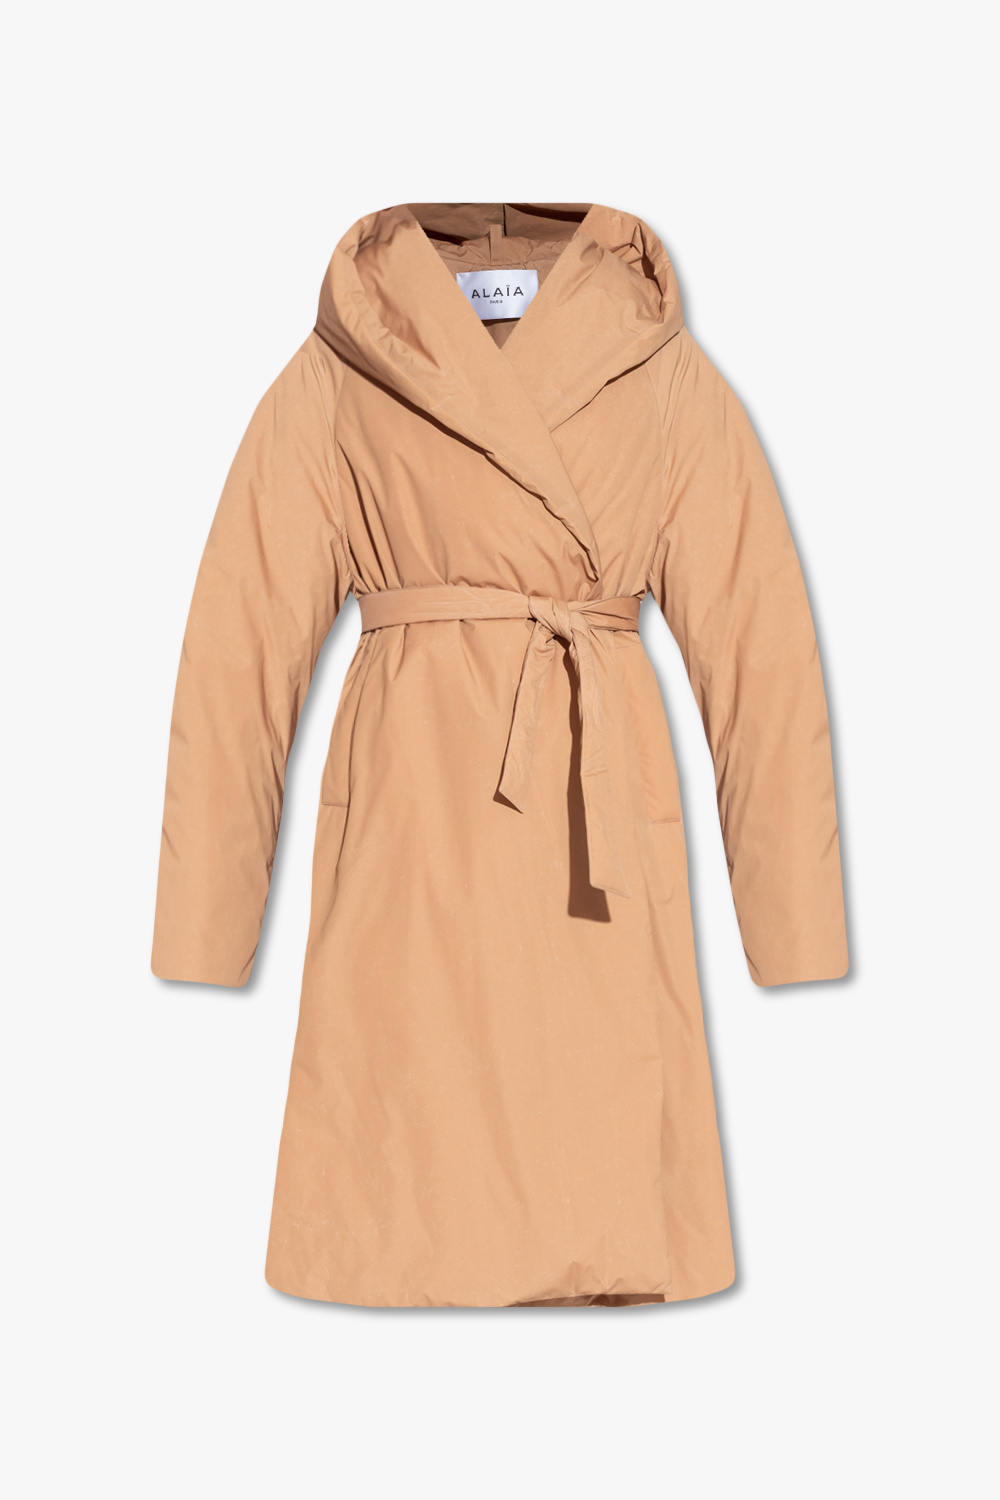 Alaïa Insulated hooded coat